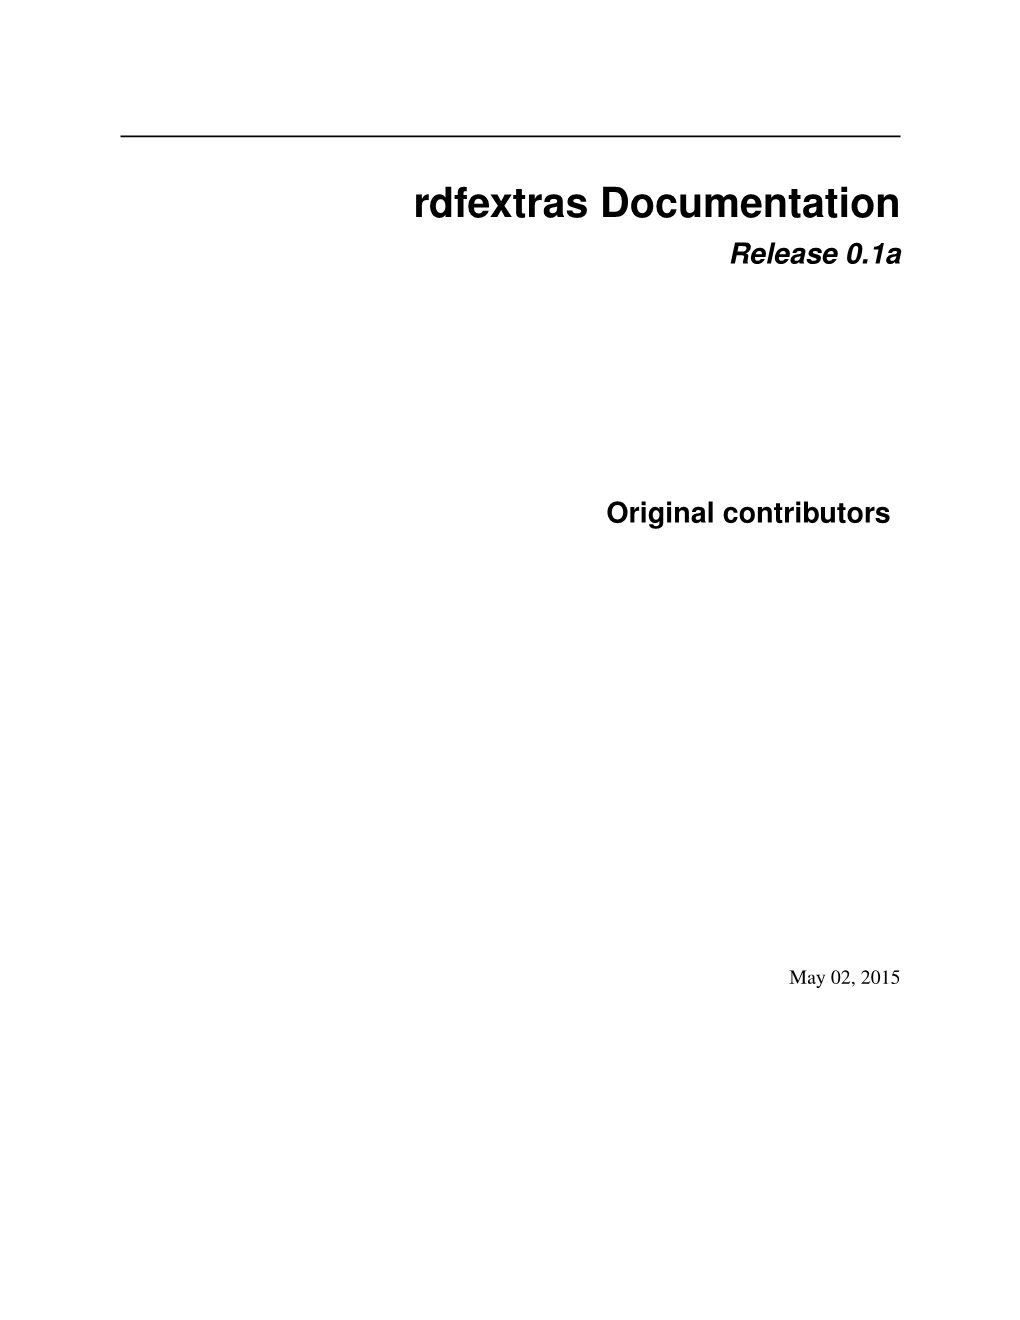 Rdfextras Documentation Release 0.1A